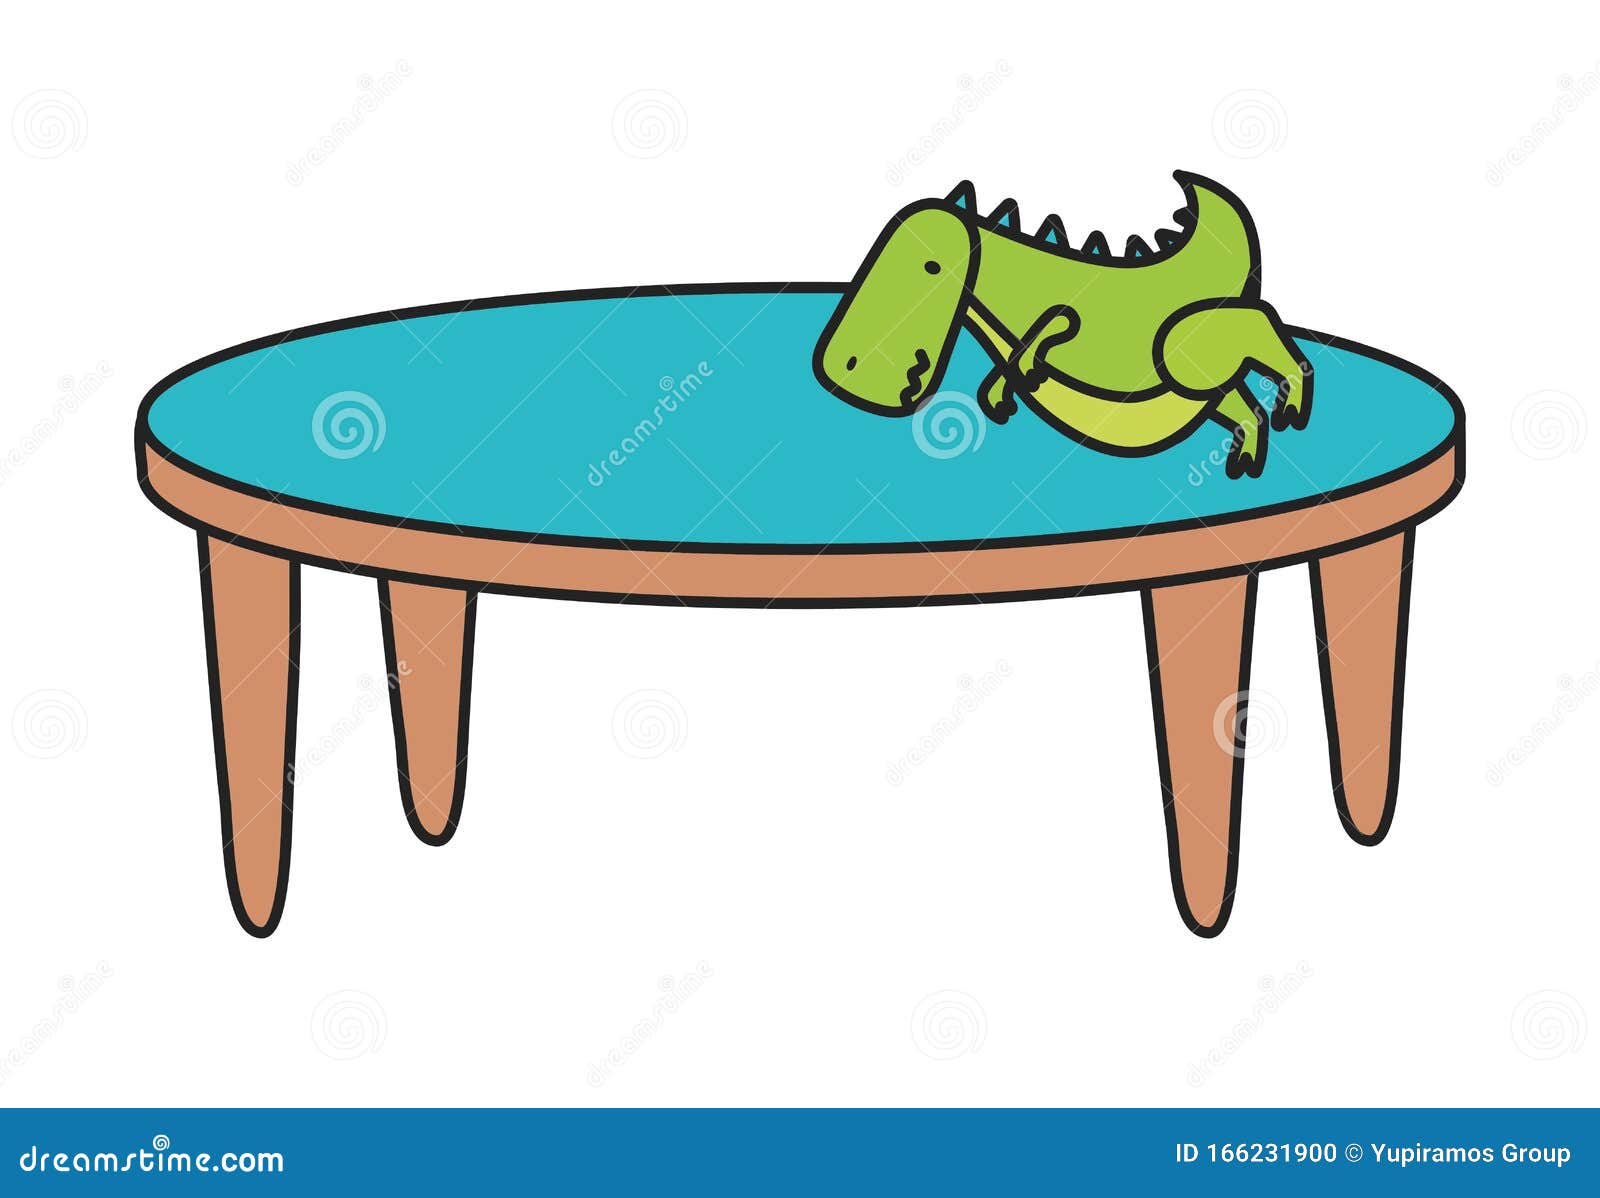 dinosaur kids table